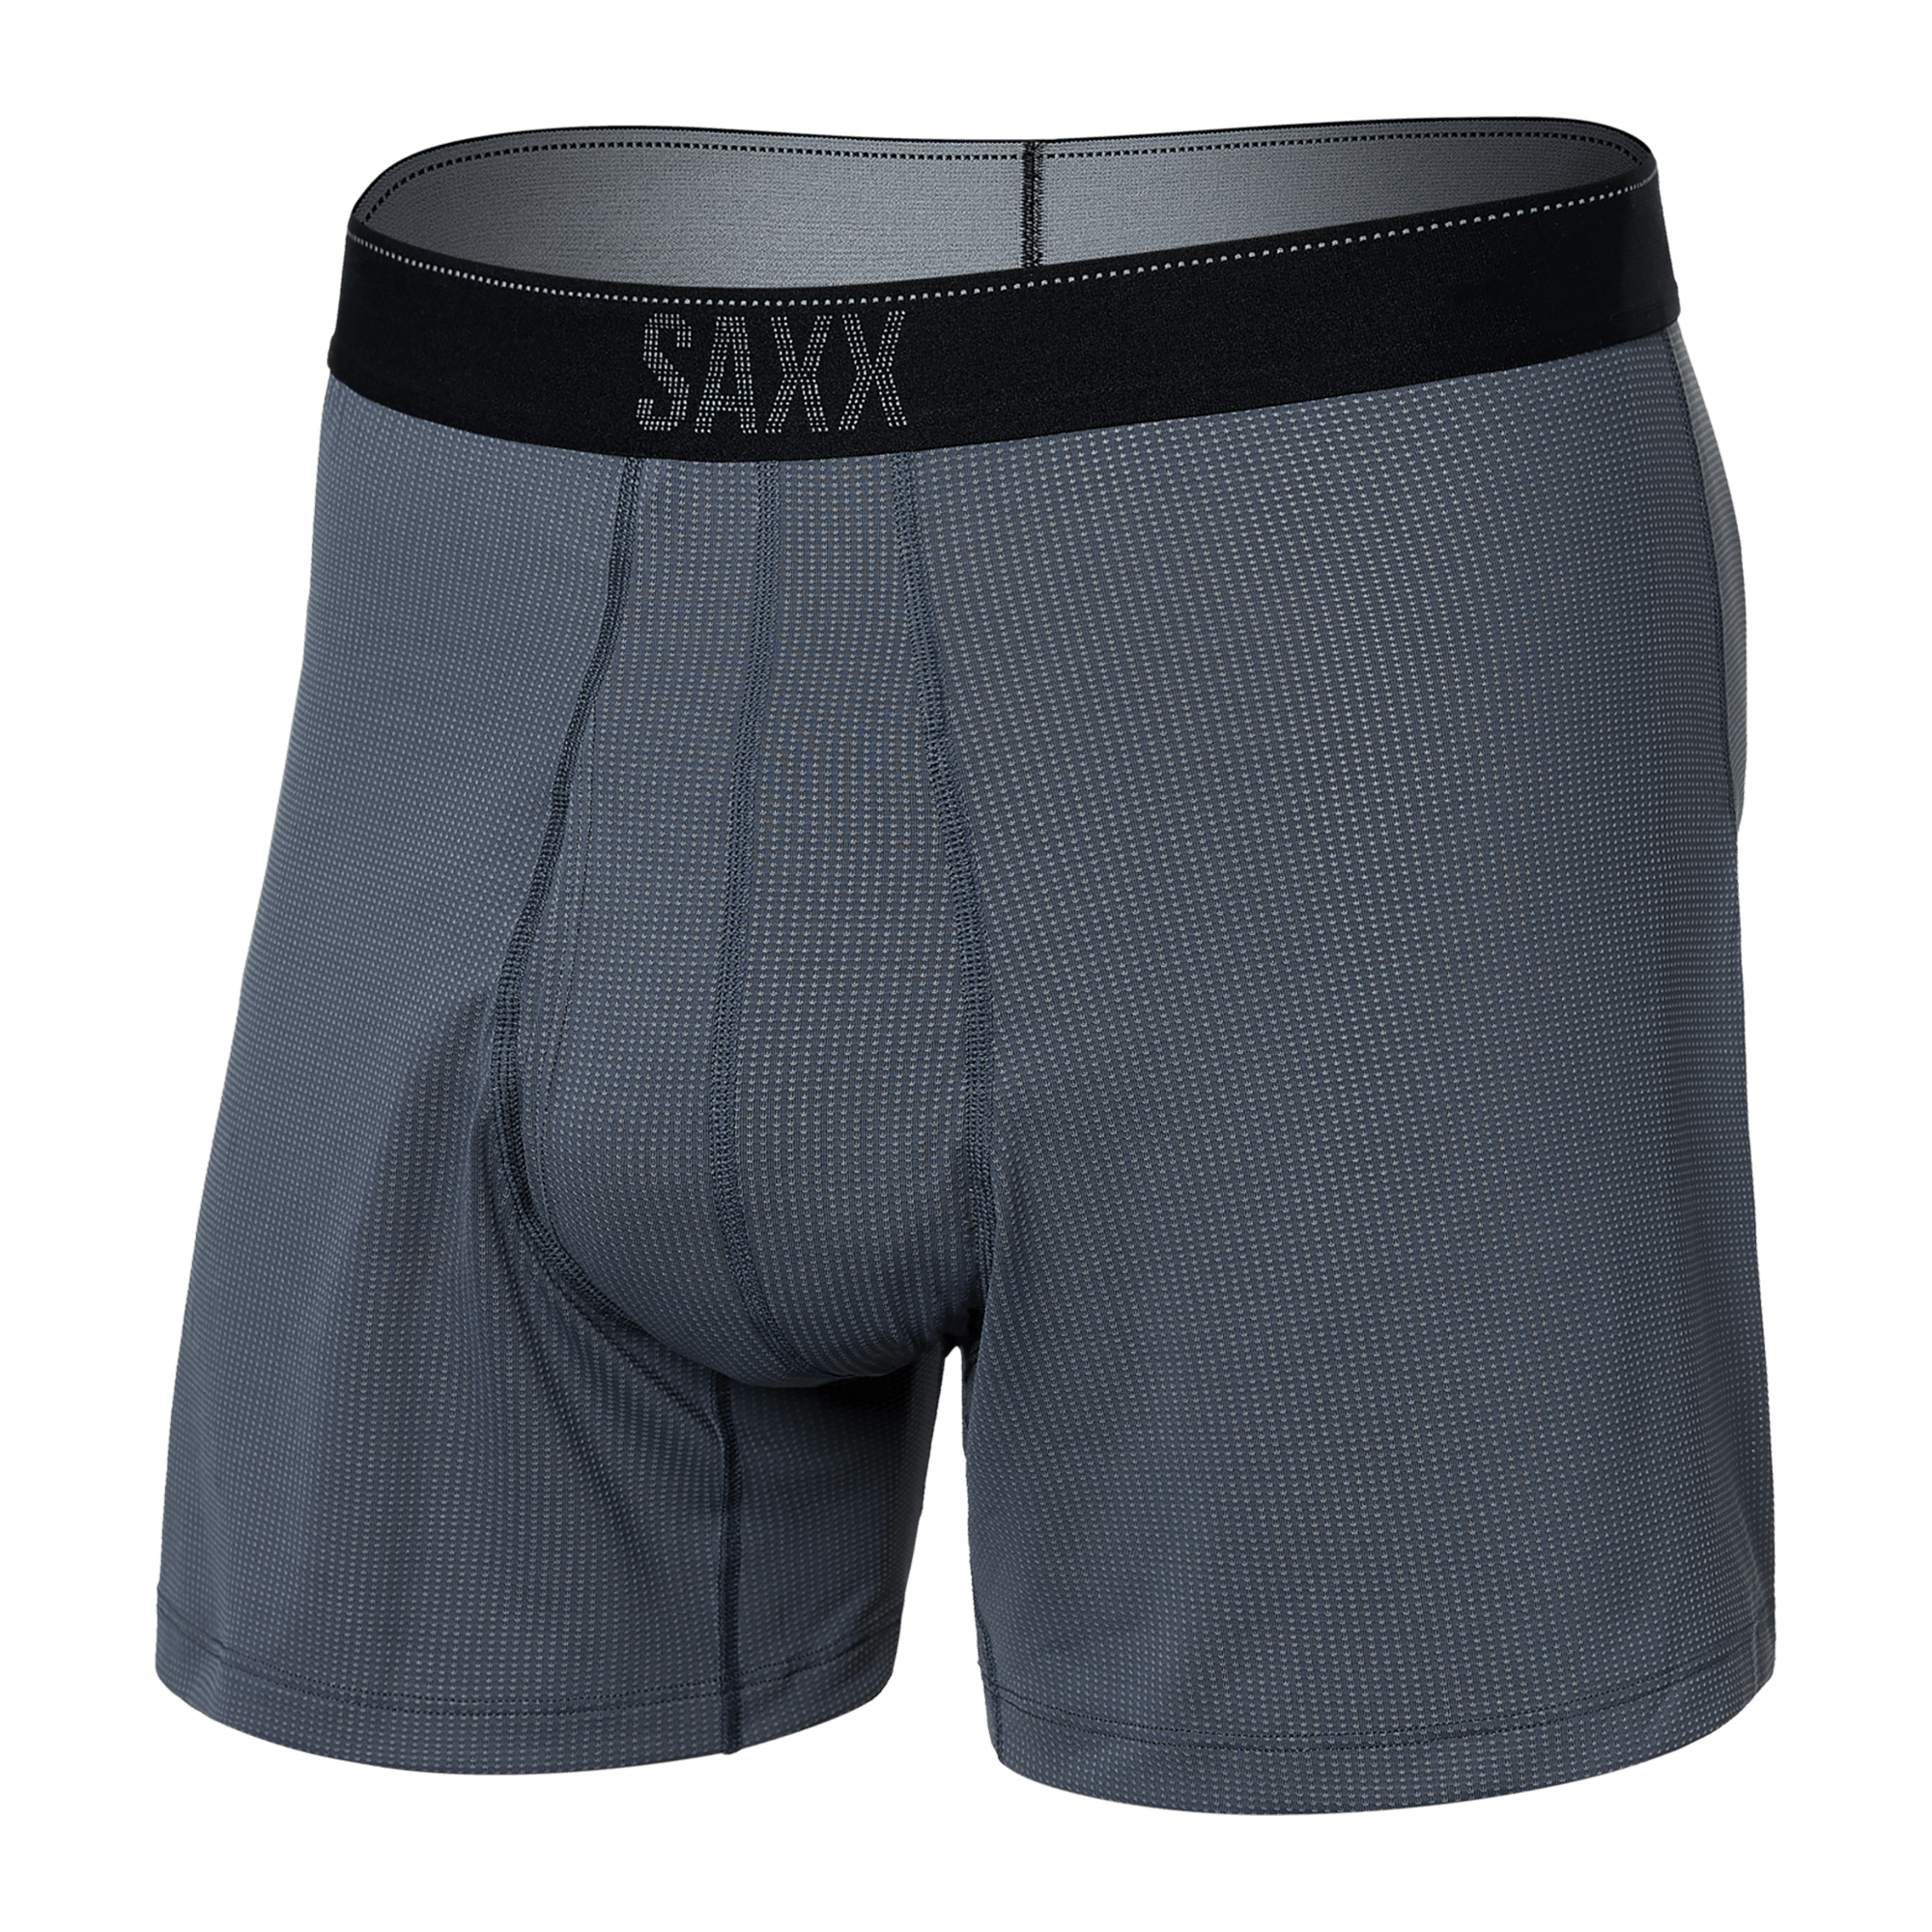 D20 Dice Mens Underwear Boxer Briefs Quick Dry Sports Underpants XL :  : Clothing, Shoes & Accessories